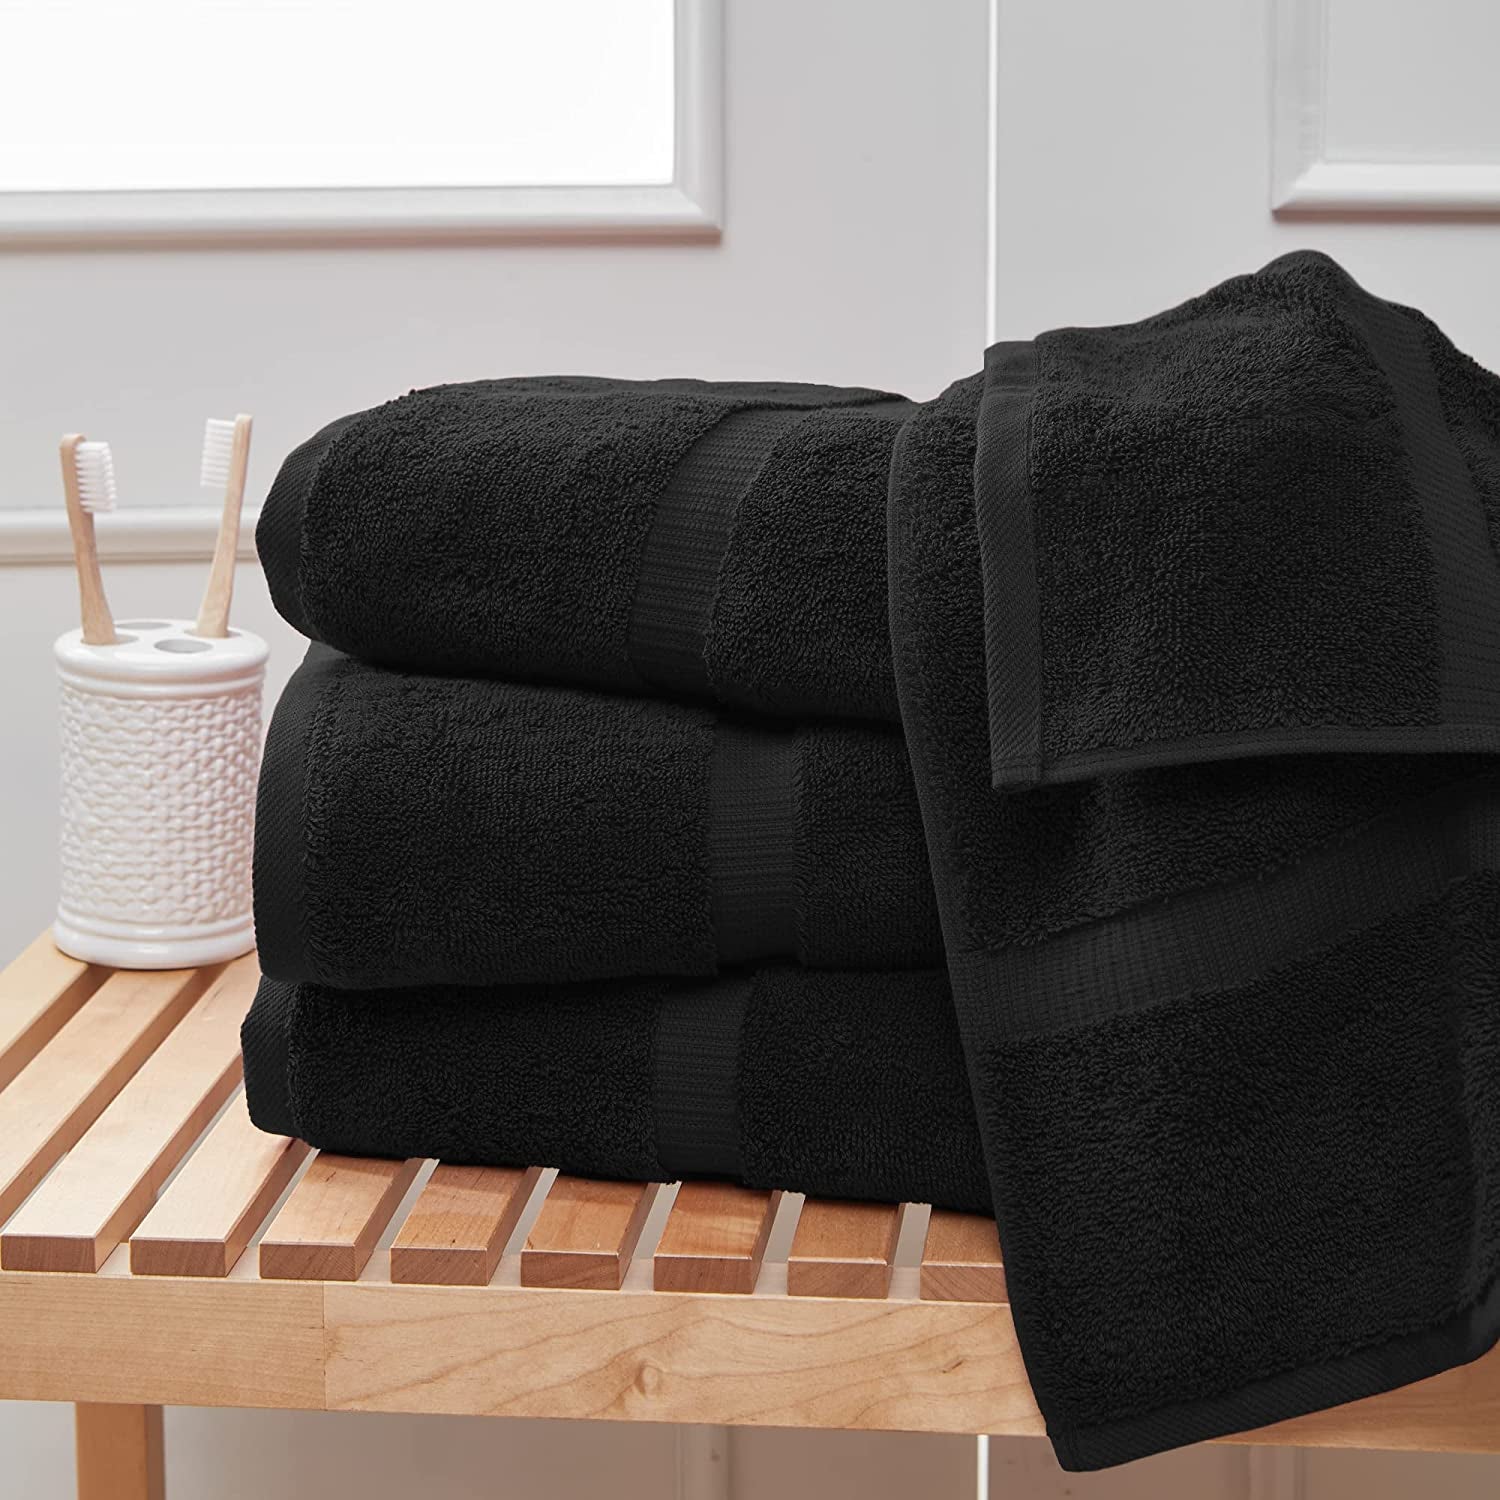 Premium Turkish Cotton Super Soft and Absorbent Towels (4-Piece Bath Towels, Black)